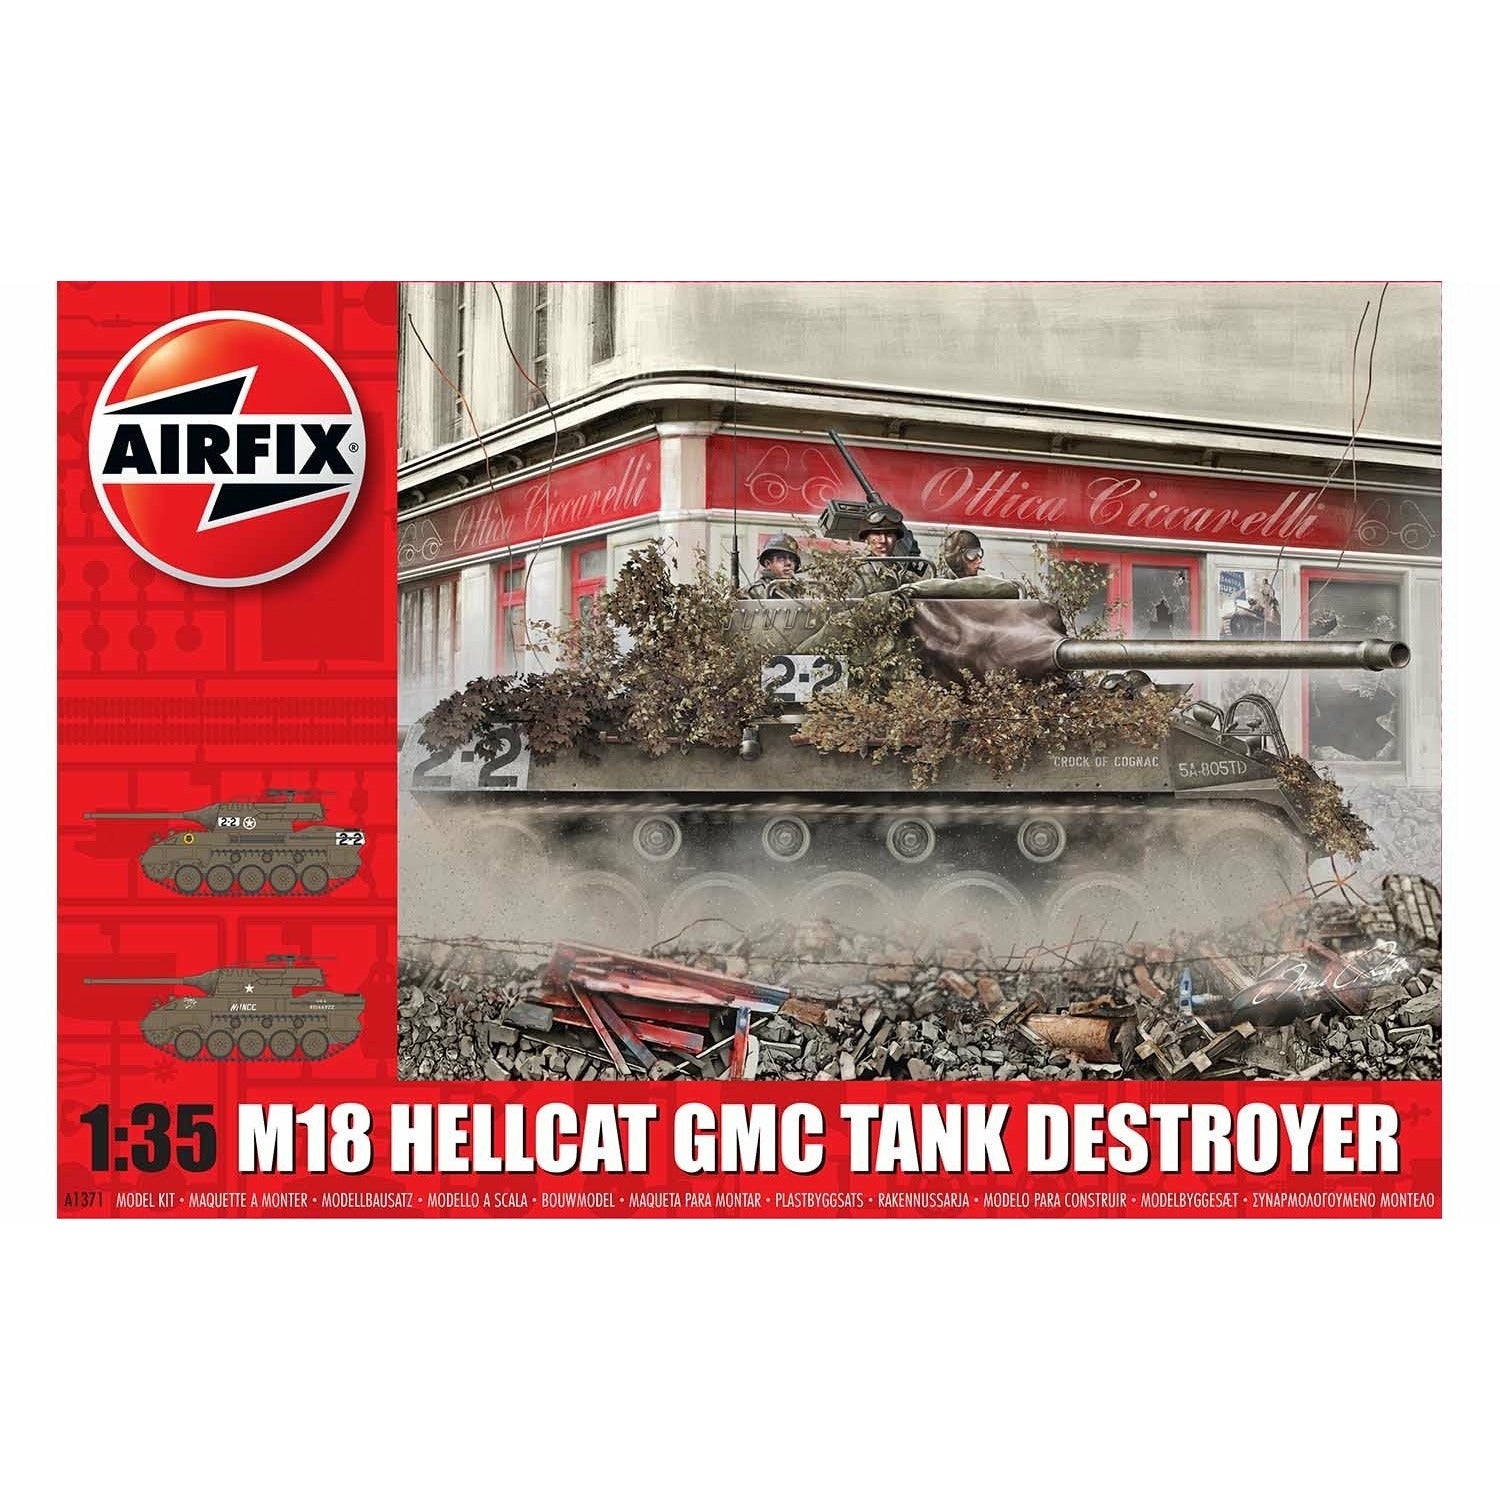 M18 Hellcat GMC Tank Destroyer 1/35 #A1371 by Airfix